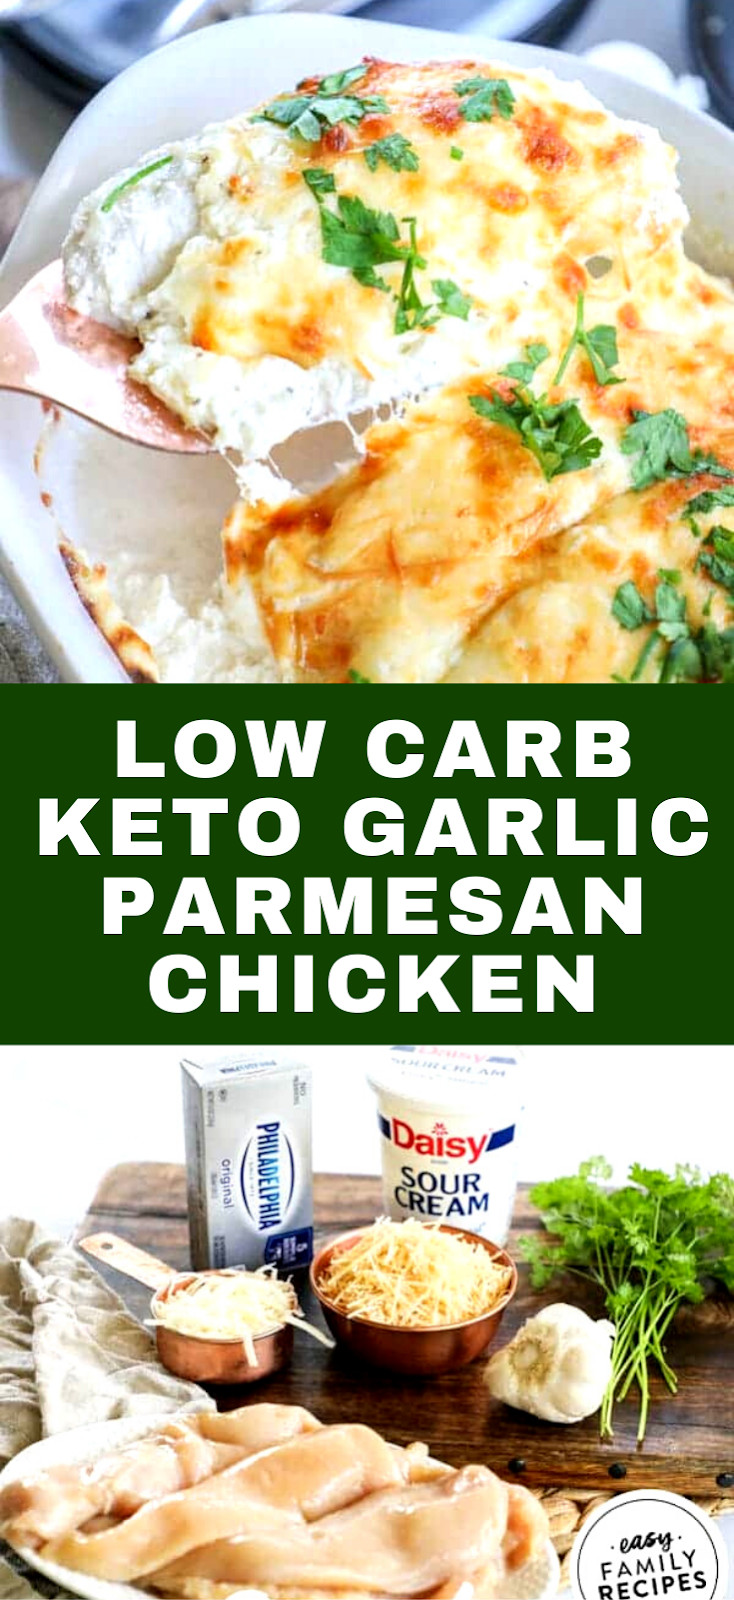 Low Carb Keto Garlic Parmesan Chicken
 Low Carb Keto Garlic Parmesan Chicken